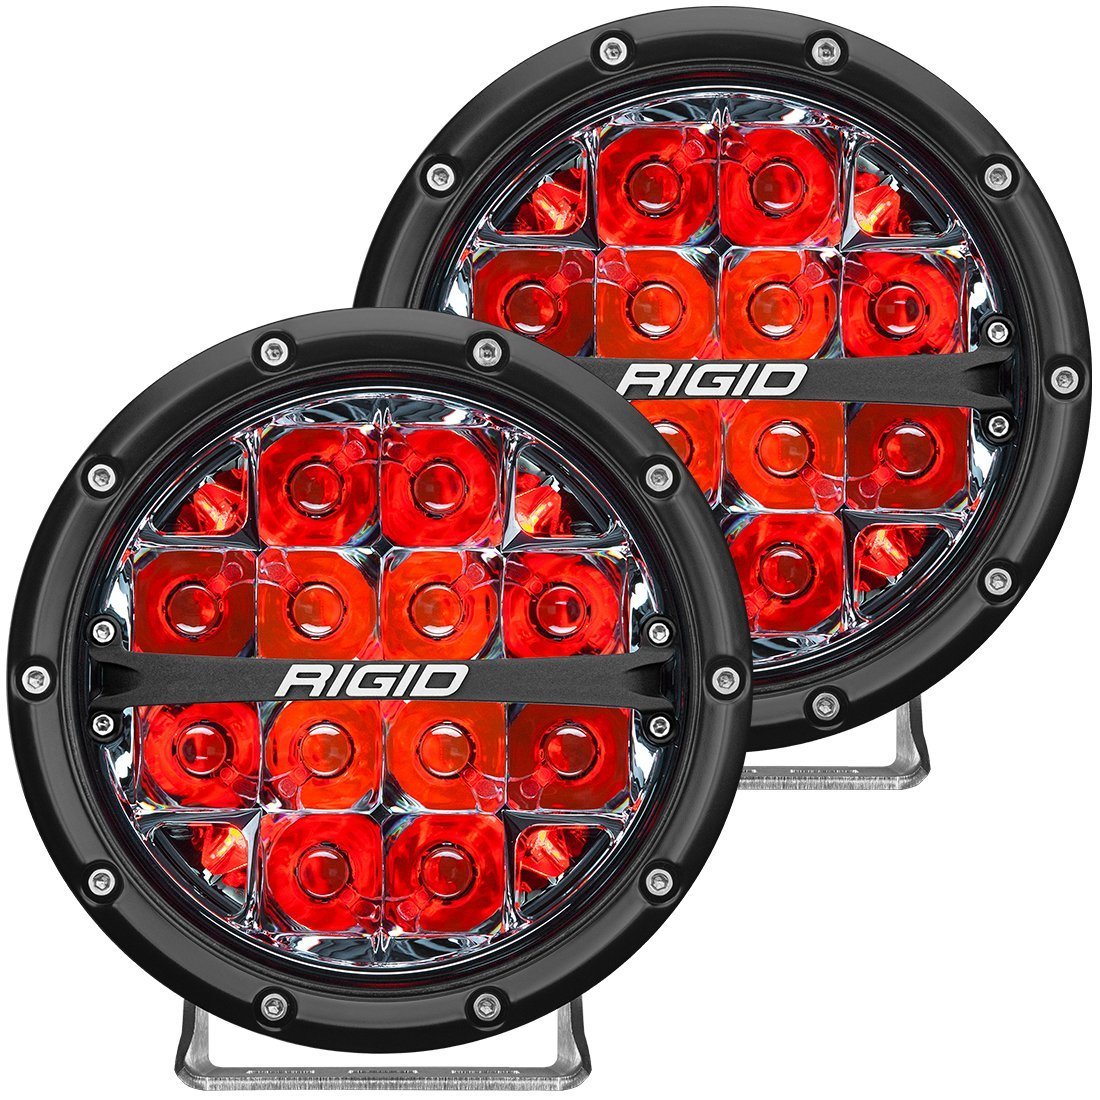 360 Series 6" LED OE Off-Road Fog Light Pair Lighting Rigid Industries Red Spot display